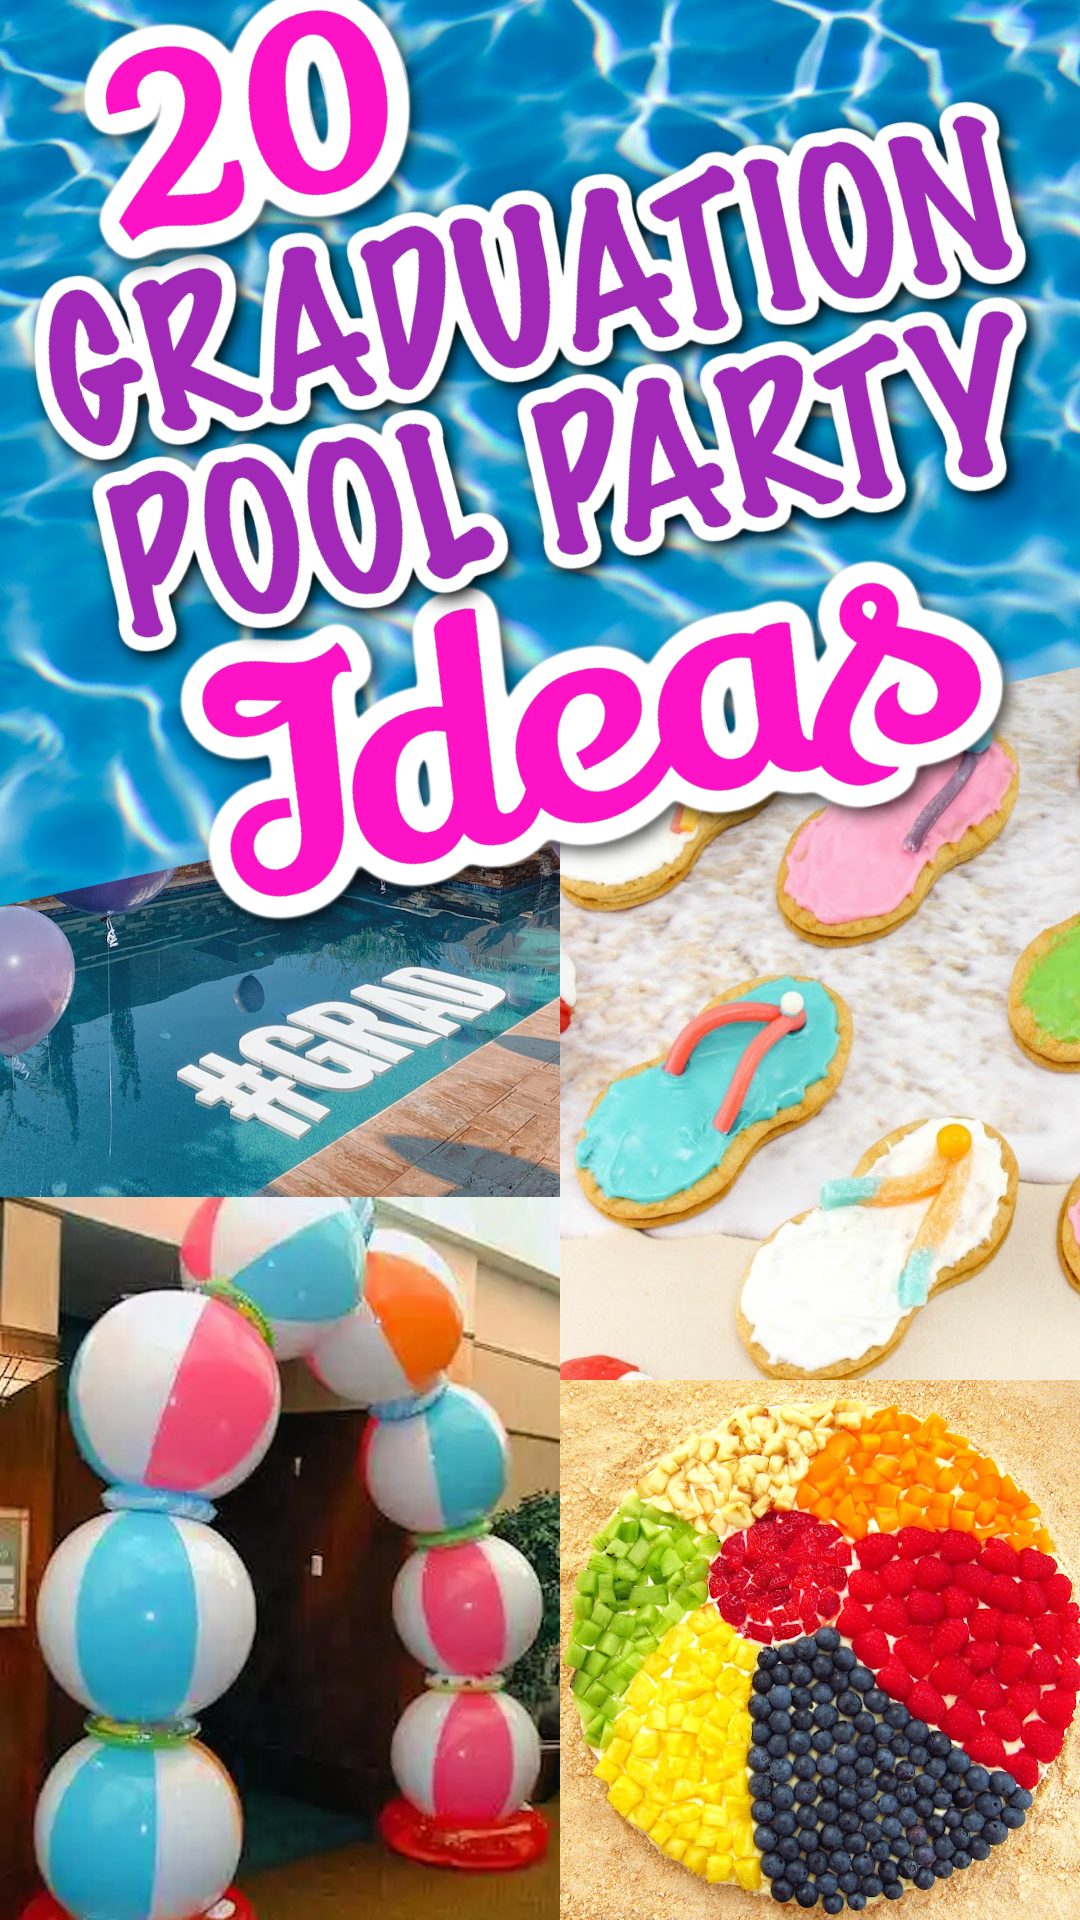 20 Graduation Pool Party Ideas